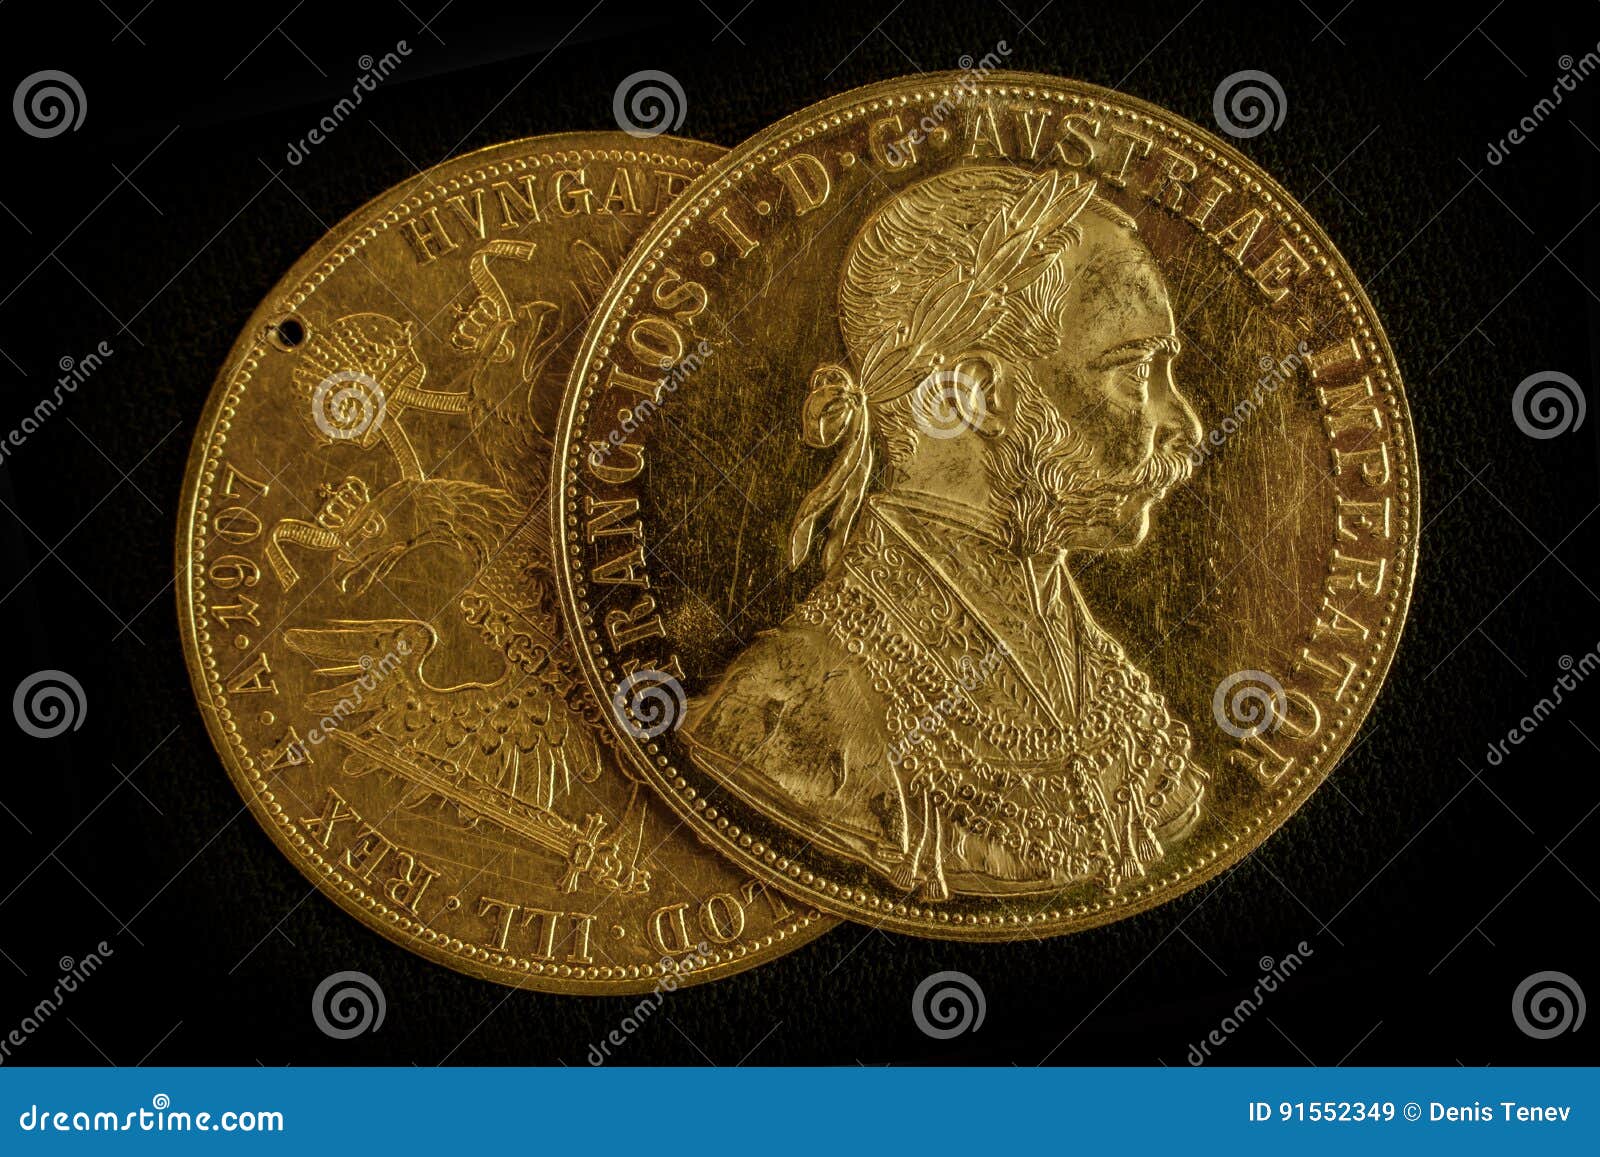 franz joseph i, austro-hungarian golden ducats from 1915